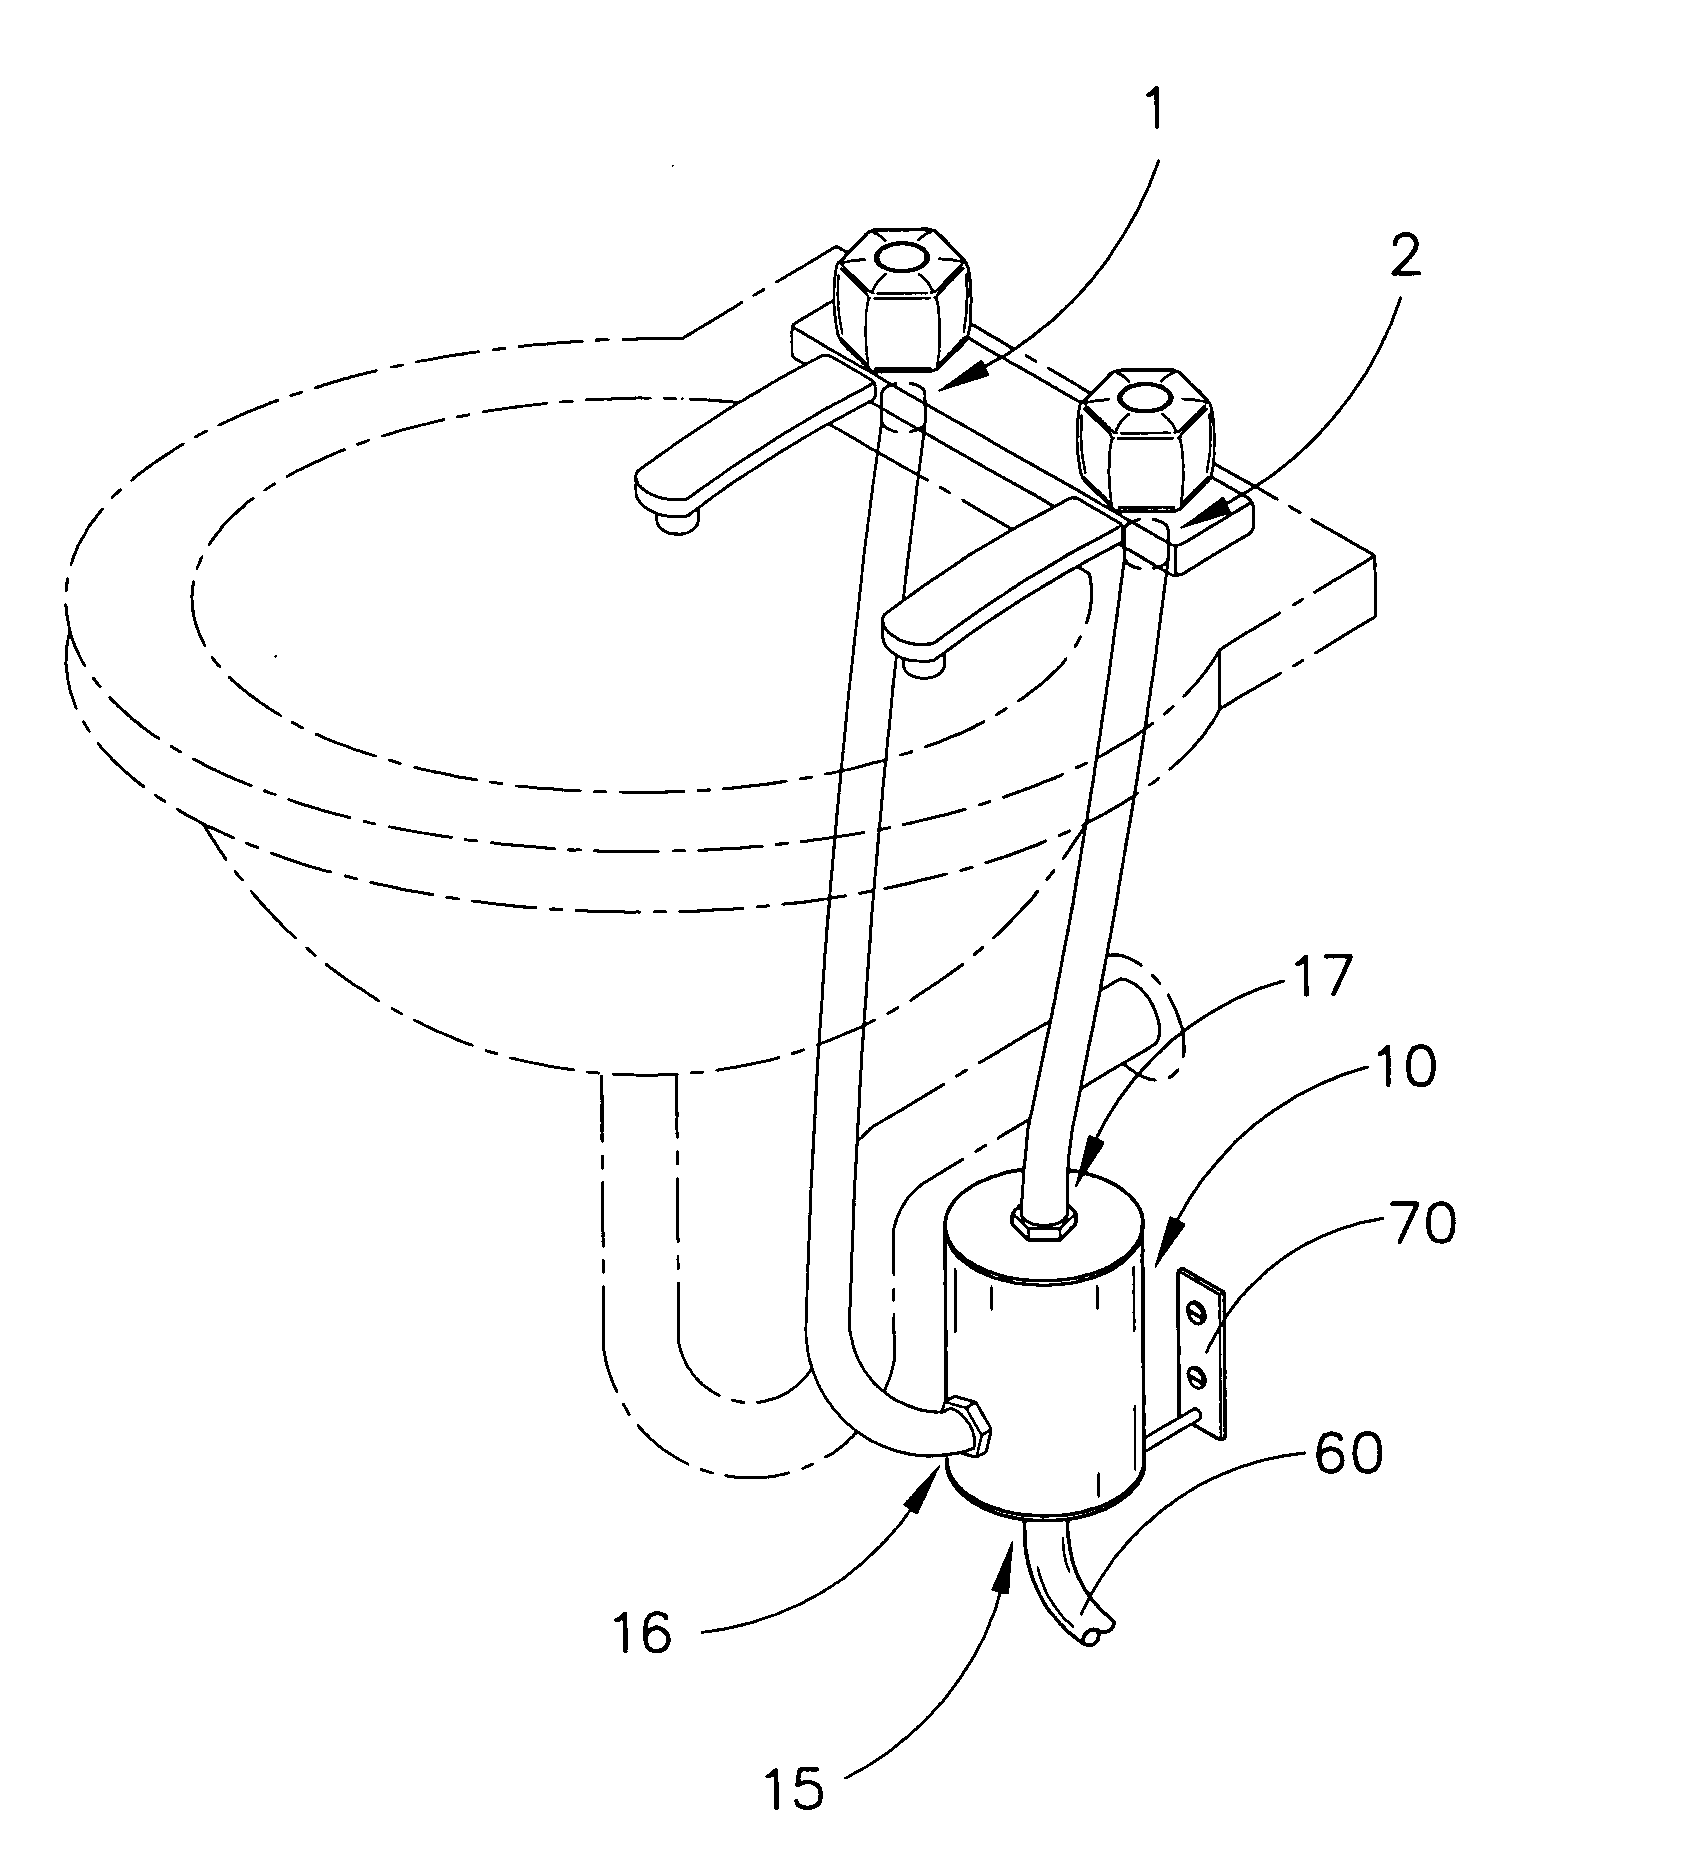 Filtration faucet system